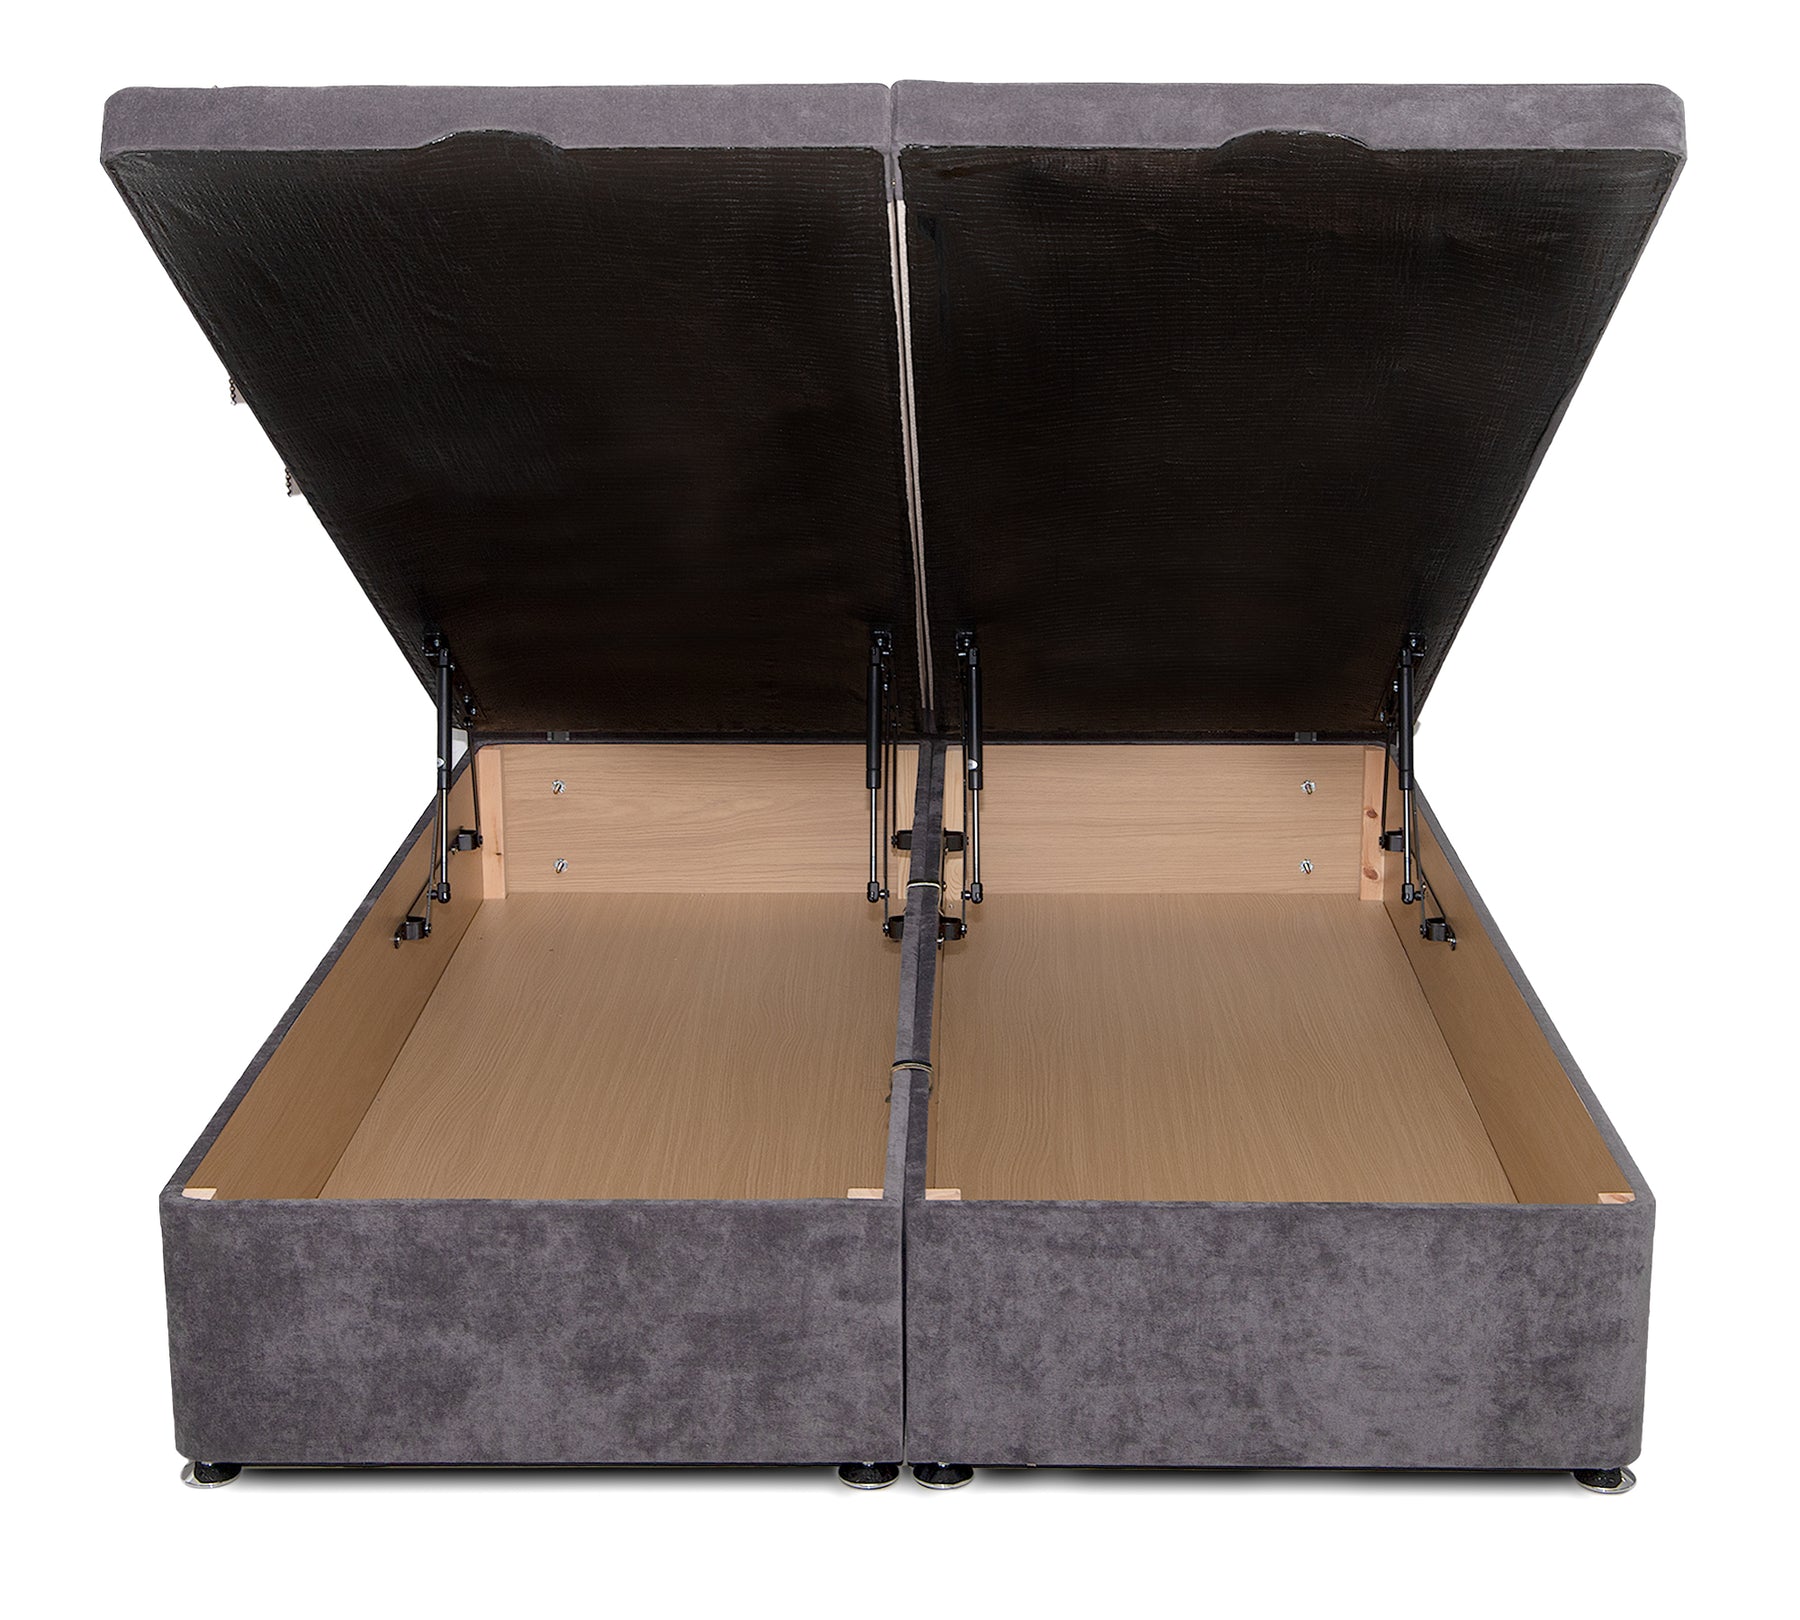 Boxy Upholstered Bed Frame